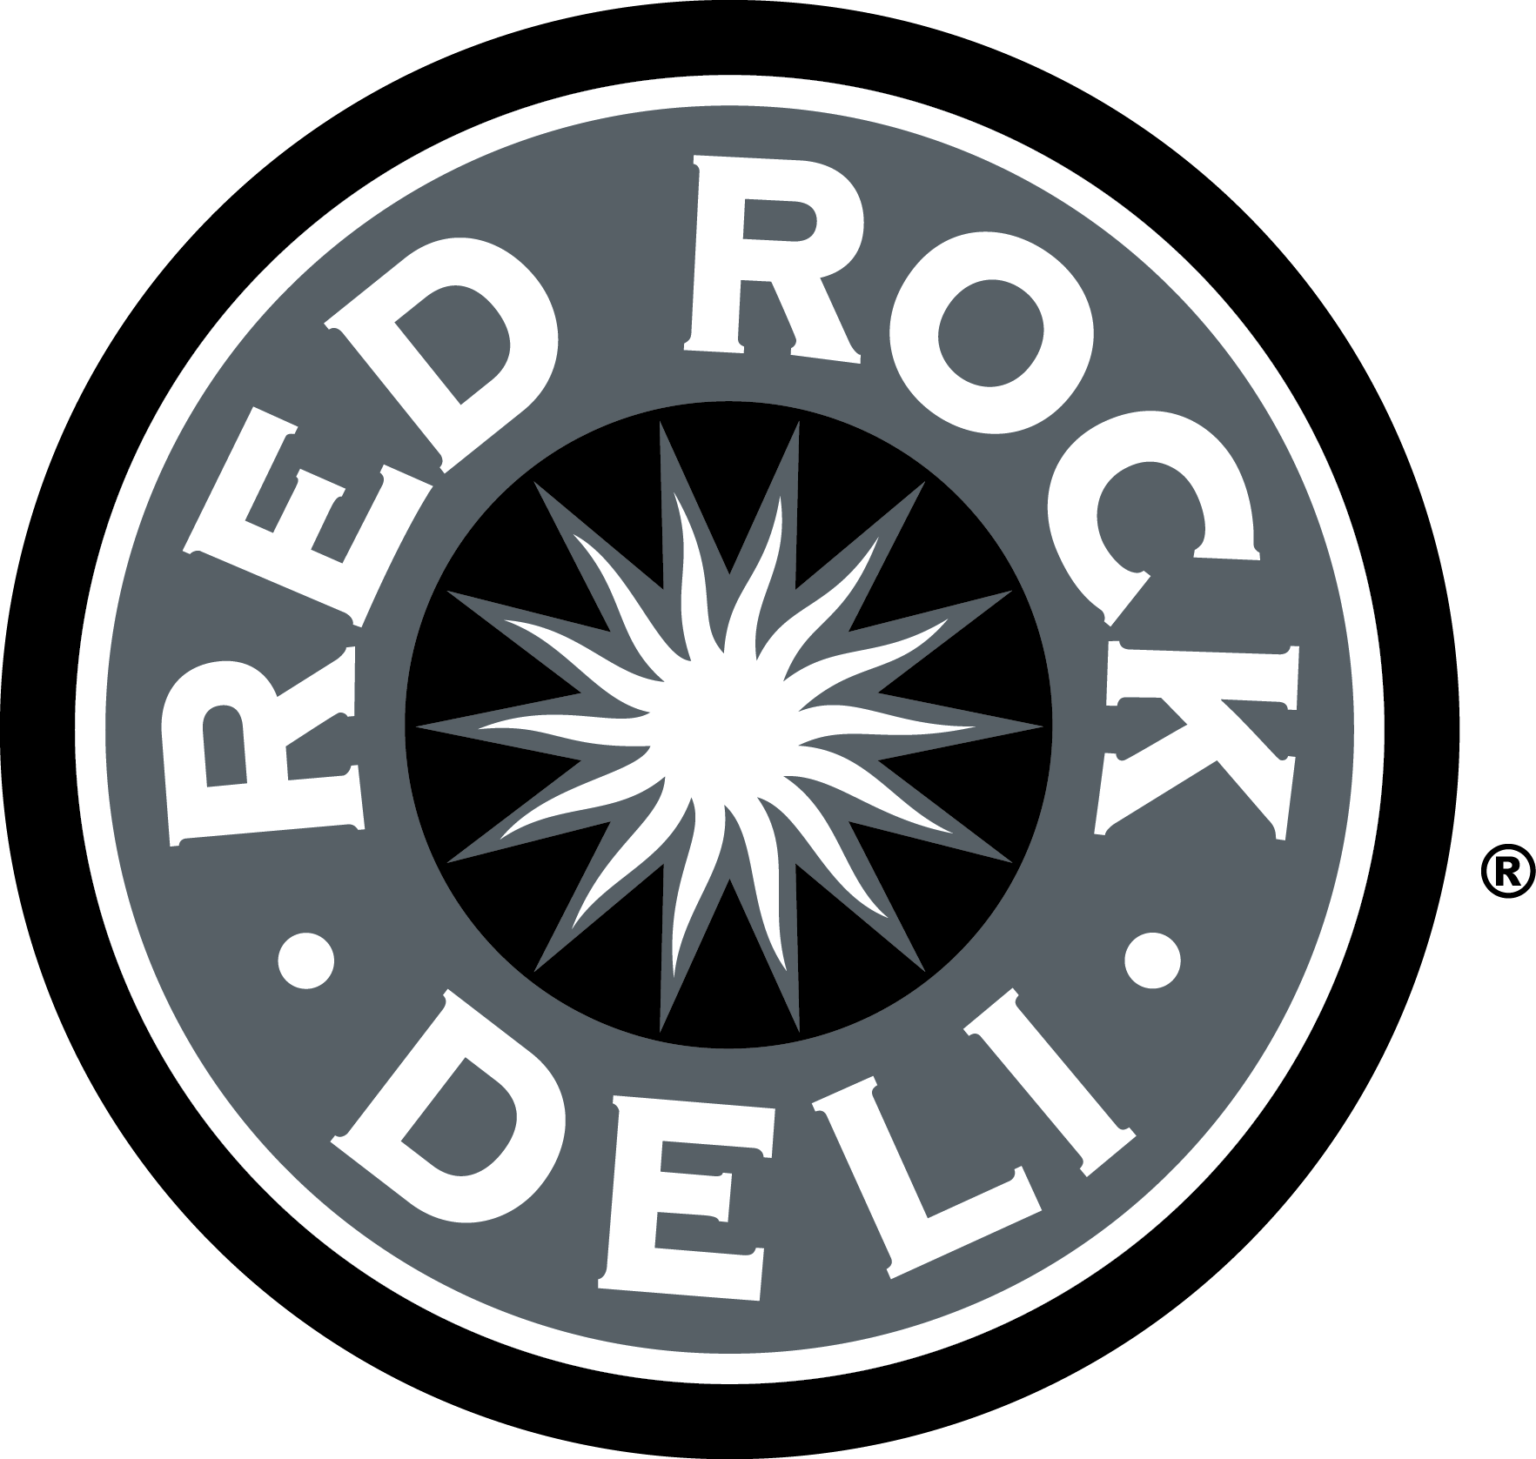 Red Rock biofuels logo. Deli logo. Deli logo PNG. Edge mean